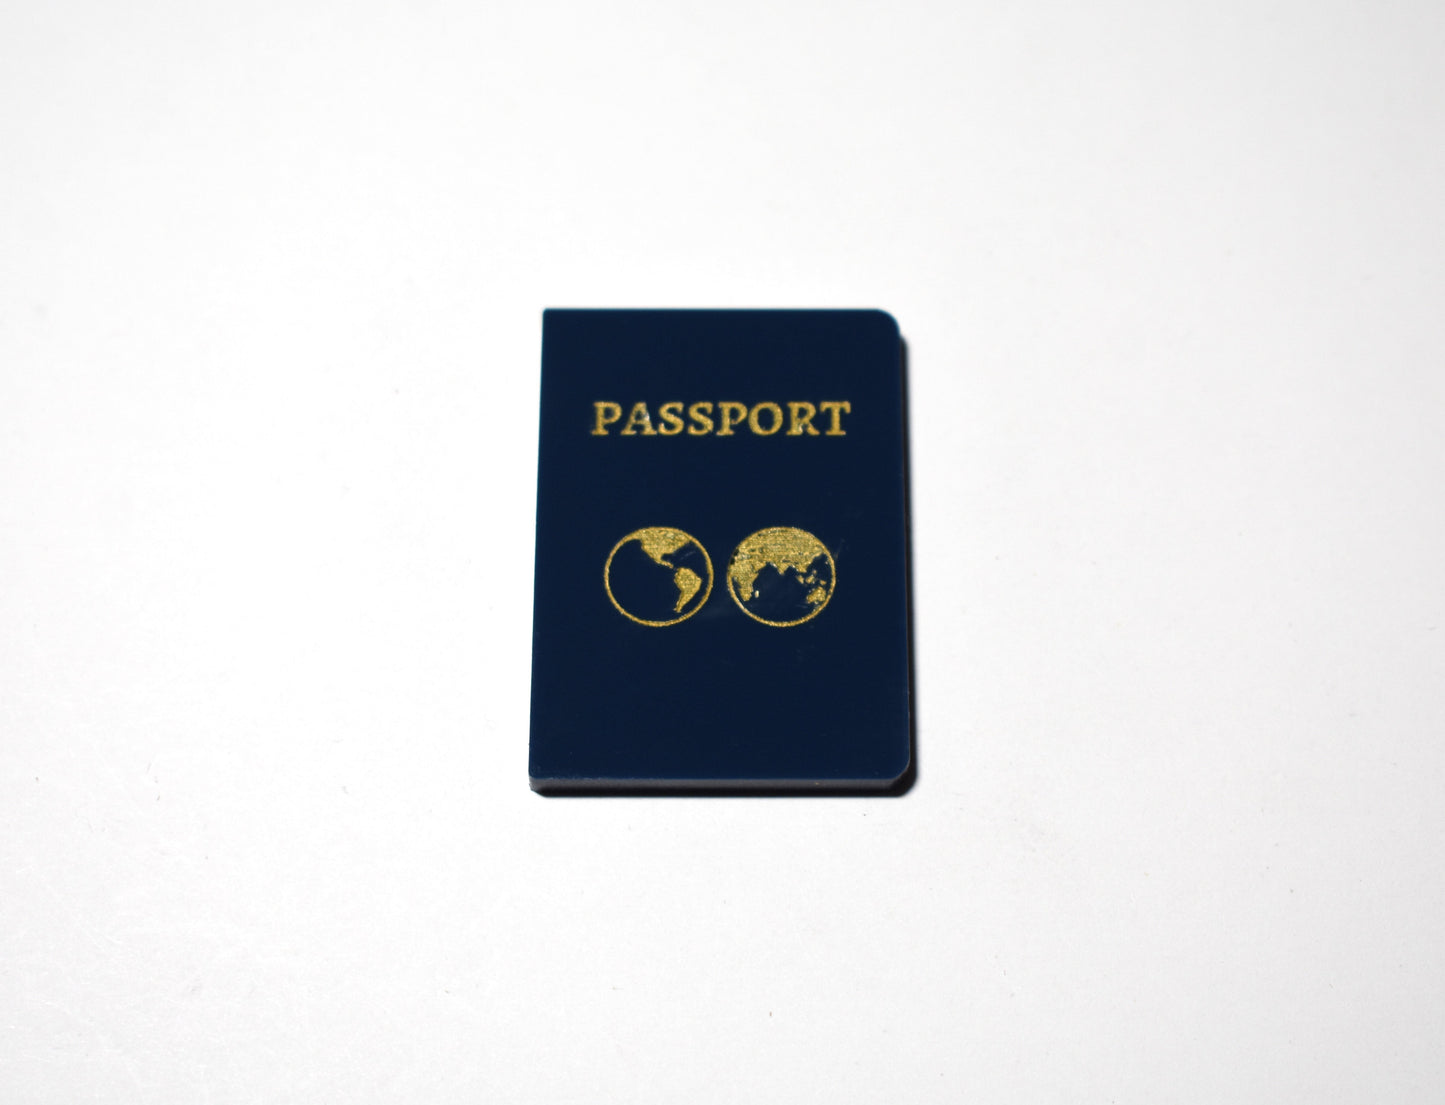 Passport - Creative Designs By Kari